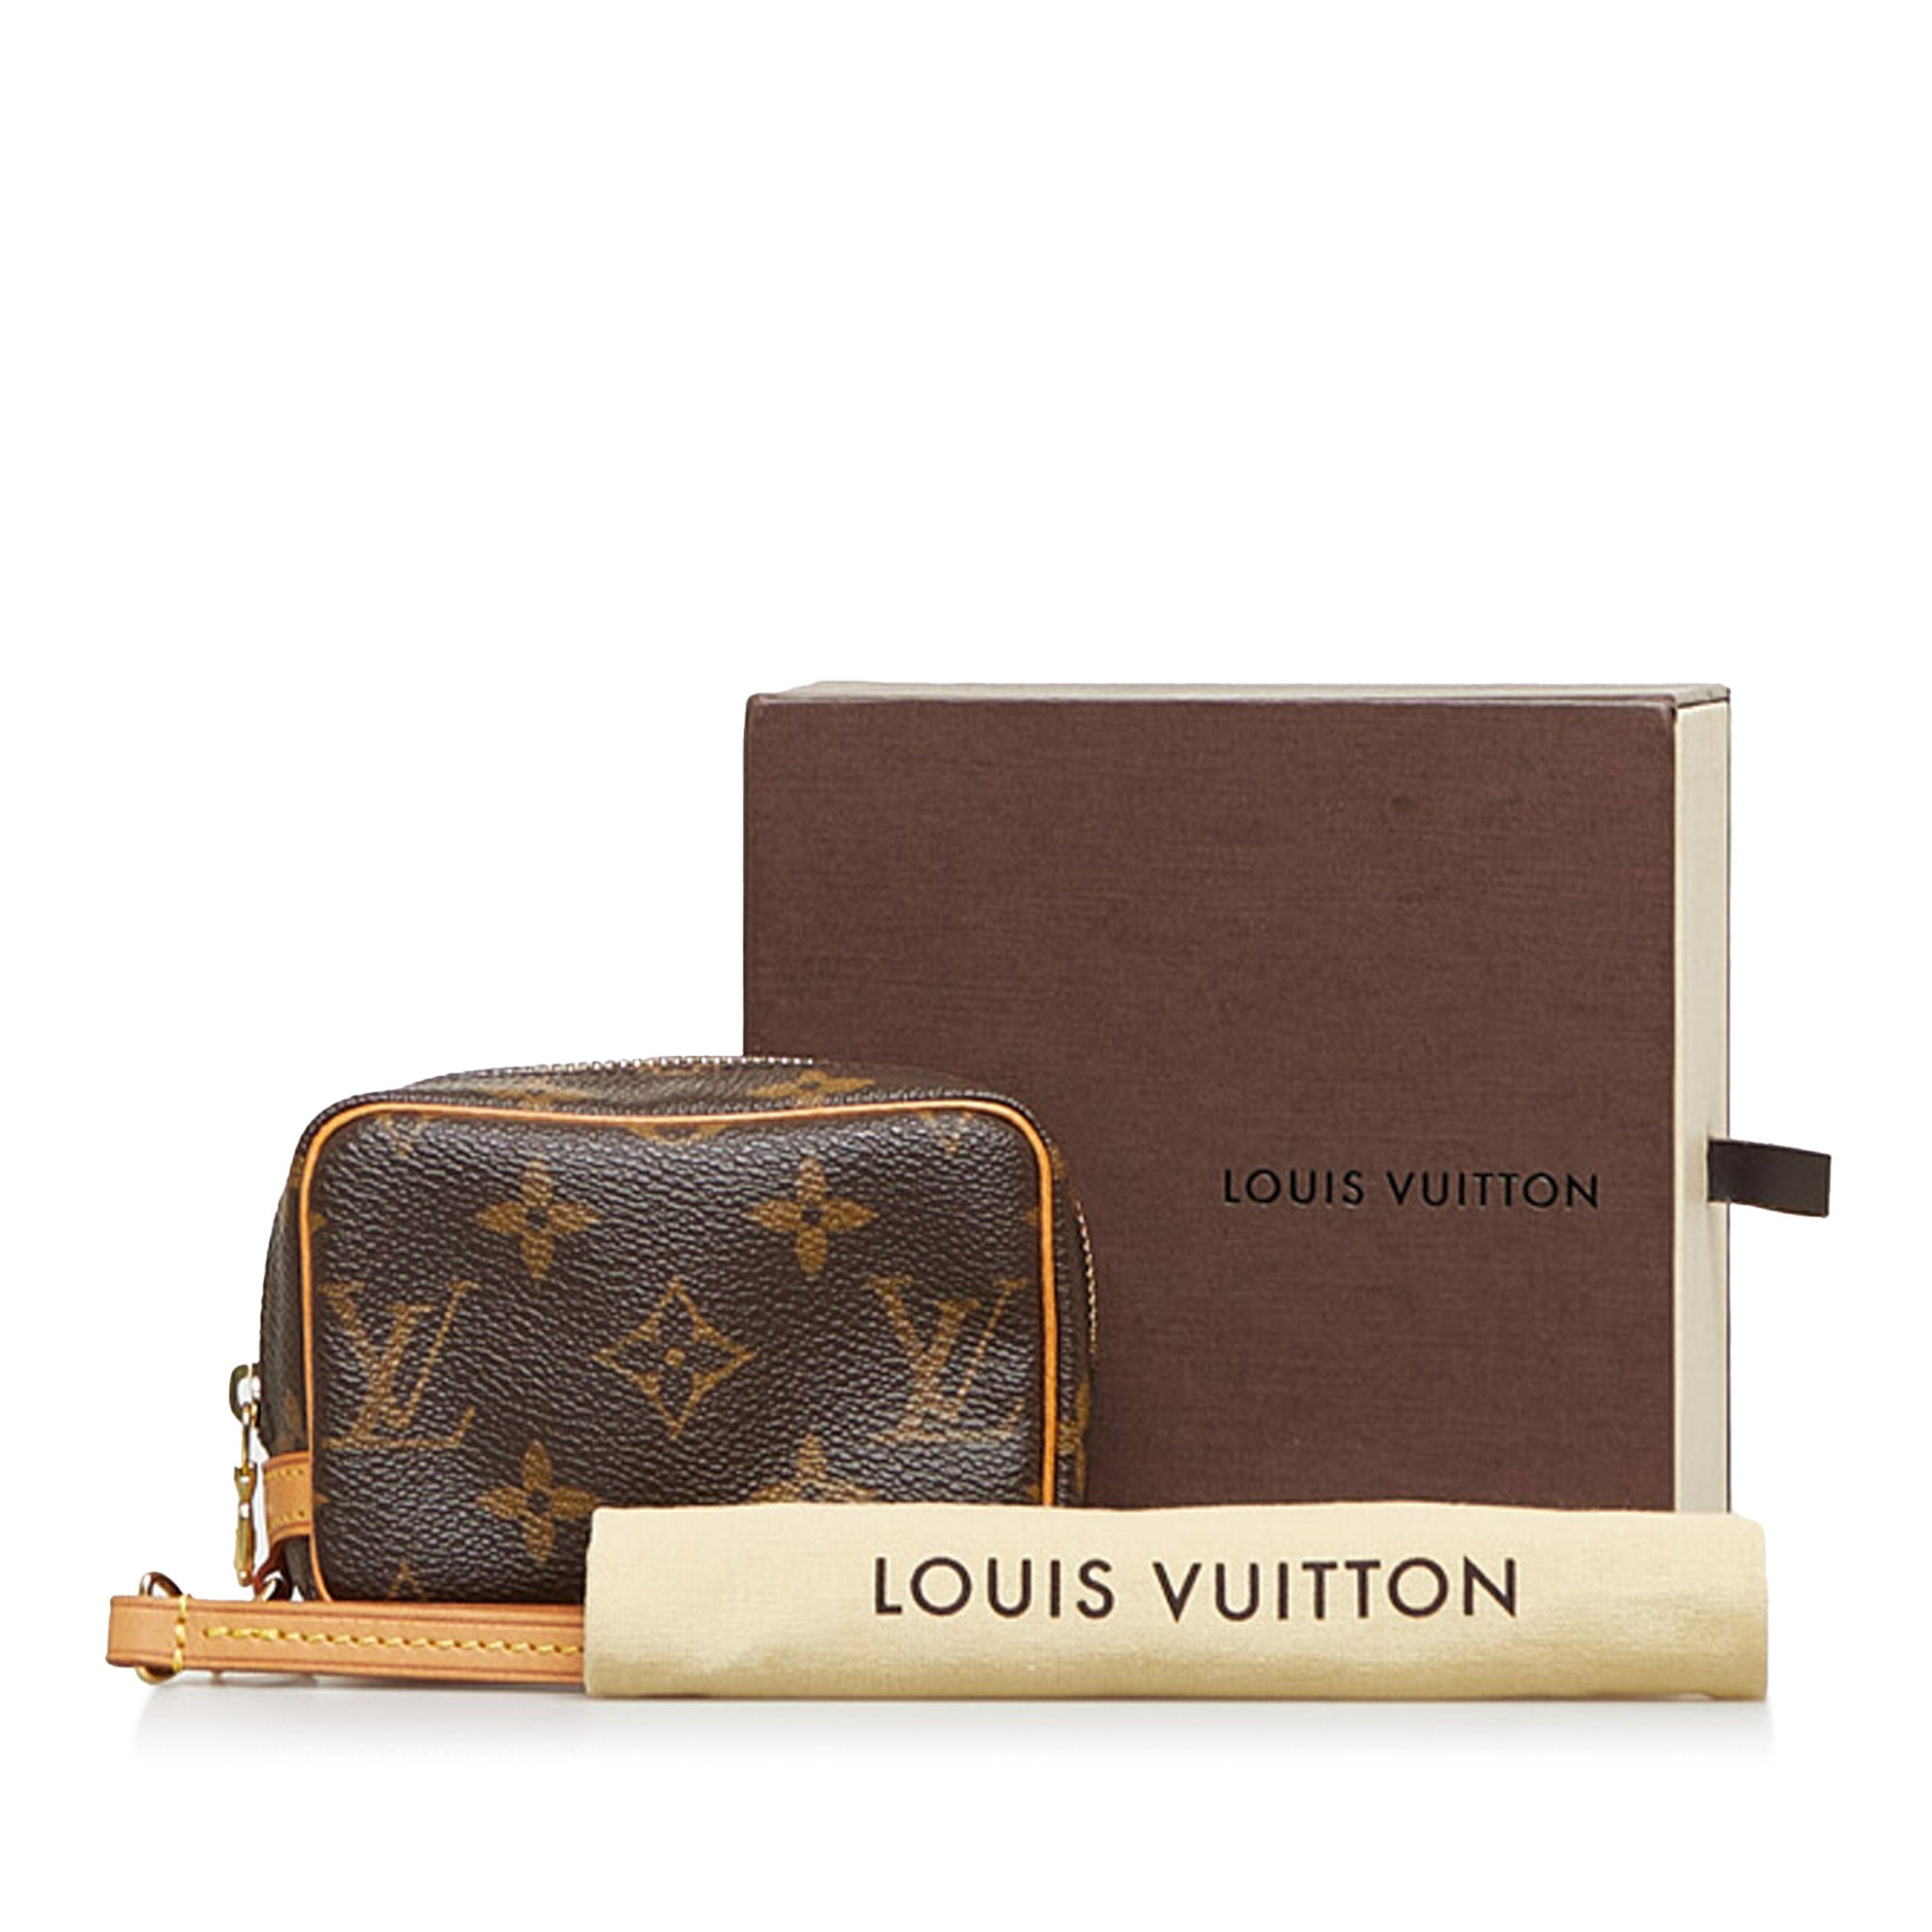 Louis Vuitton Authenticated Wapity Clutch Bag